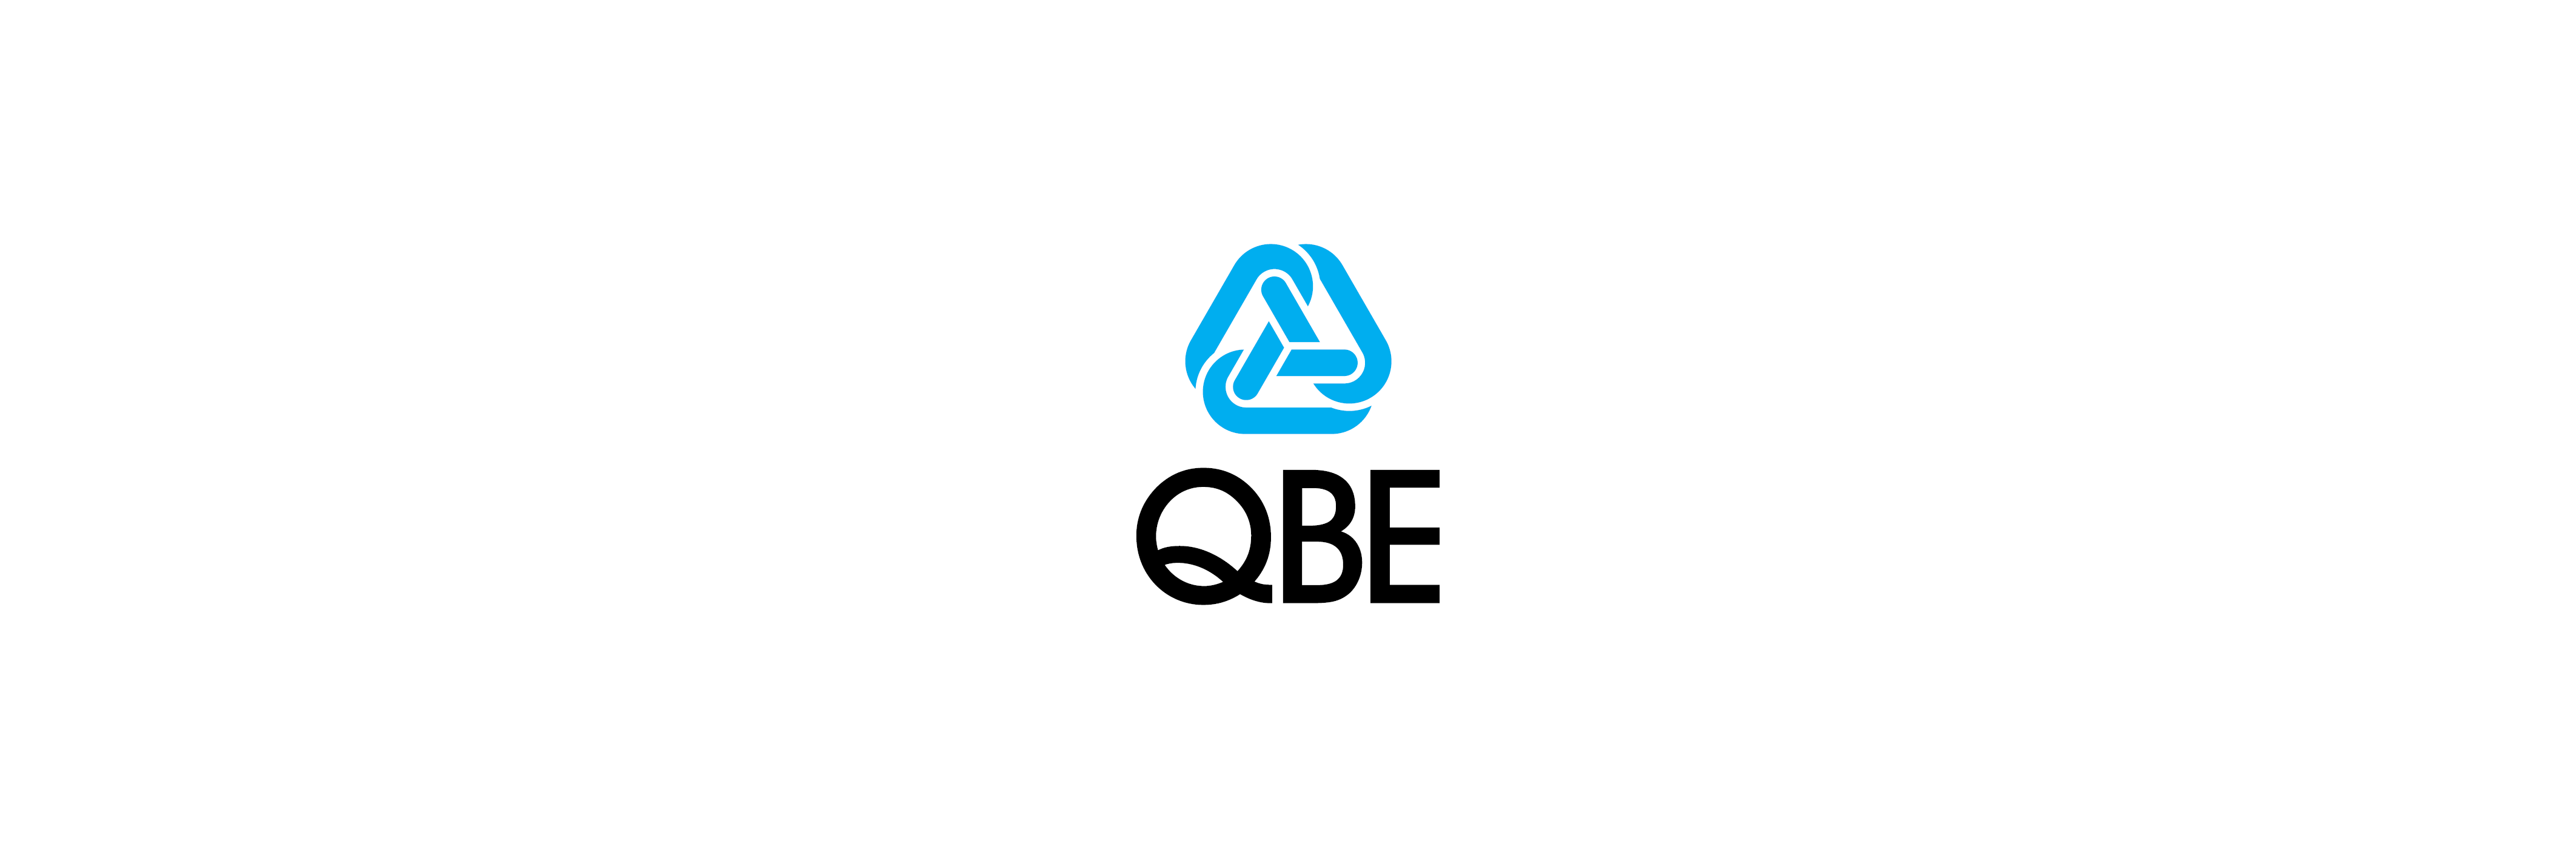 qbe travel insurance hotline